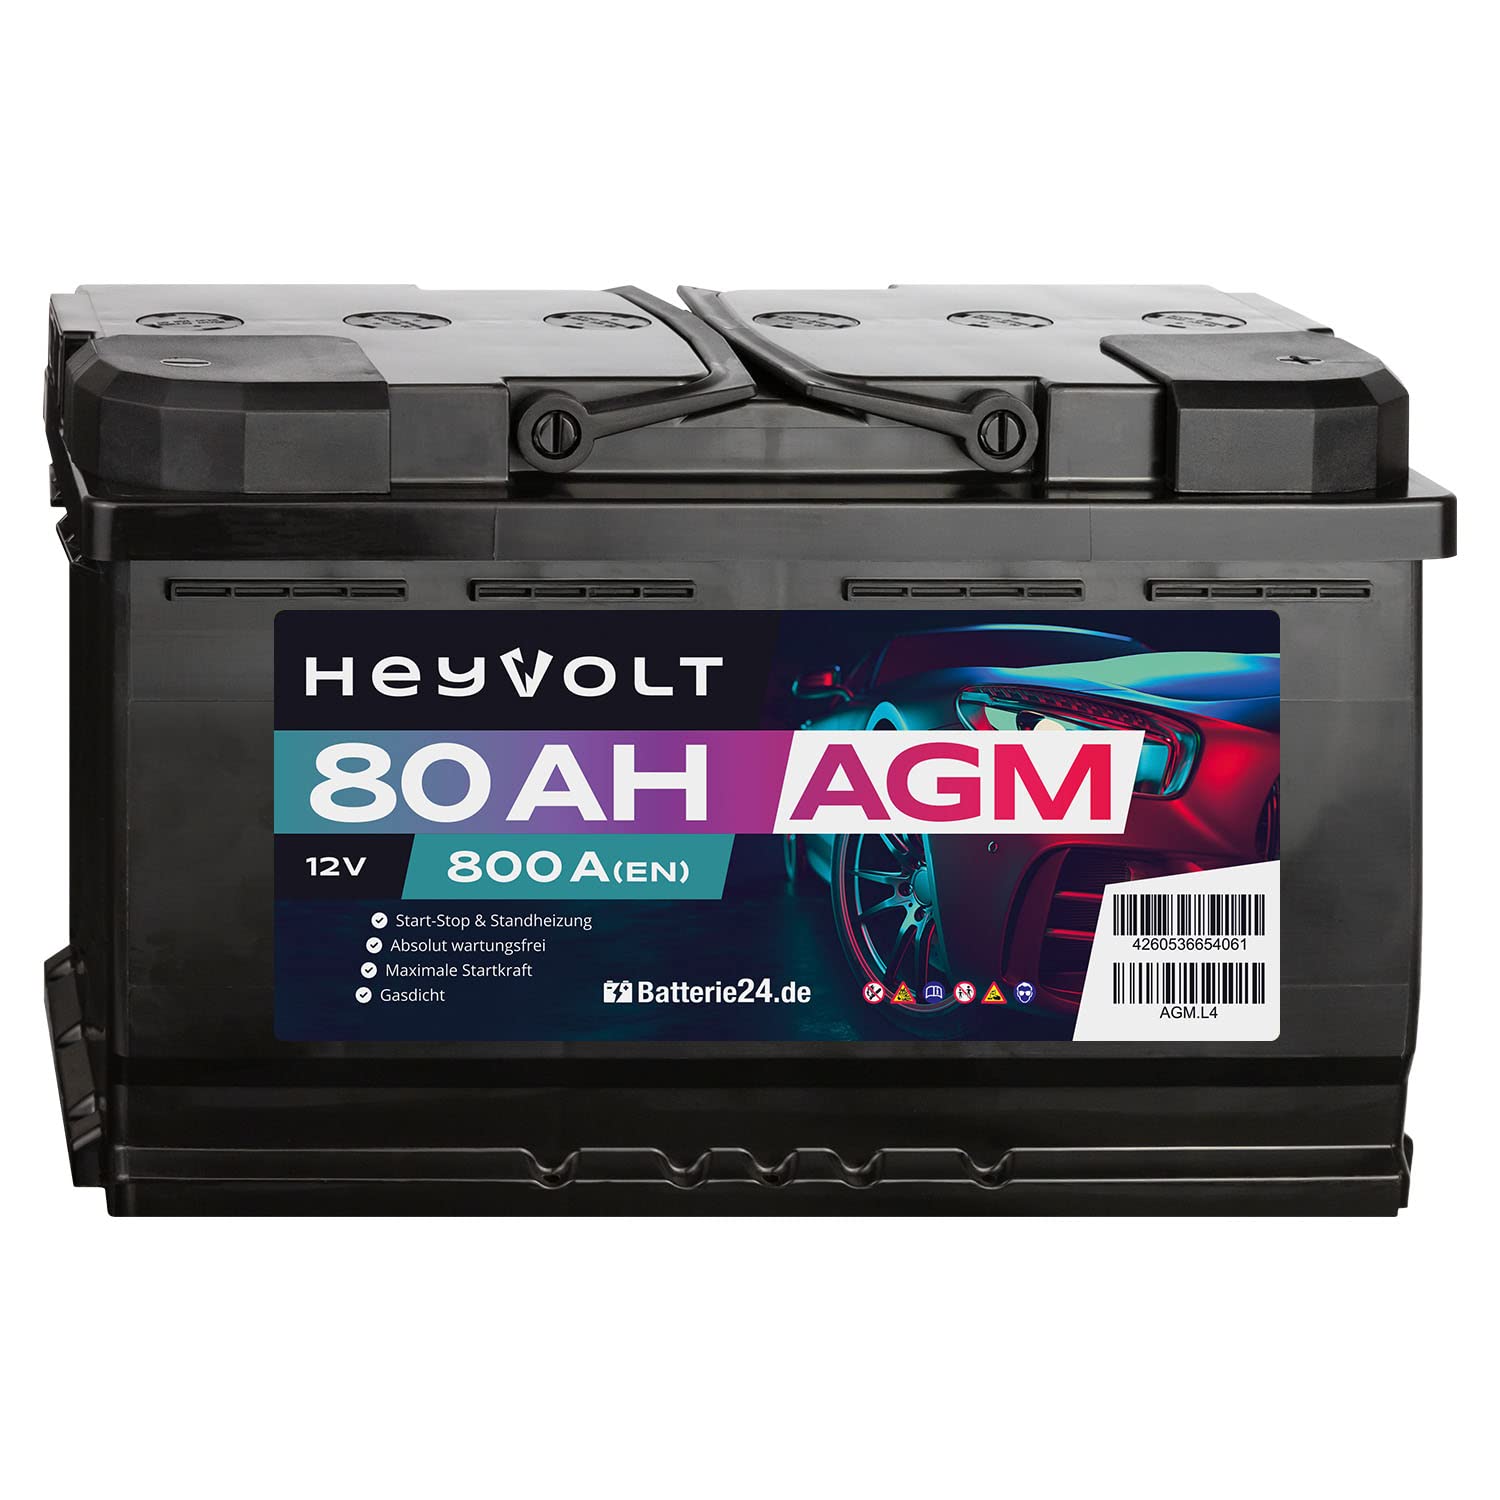 HeyVolt AGM Autobatterie 12V 80Ah 800A/EN Starterbatterie, Start-Stopp & Standheizung geeignet, absolut wartungsfrei von Batterie24.de